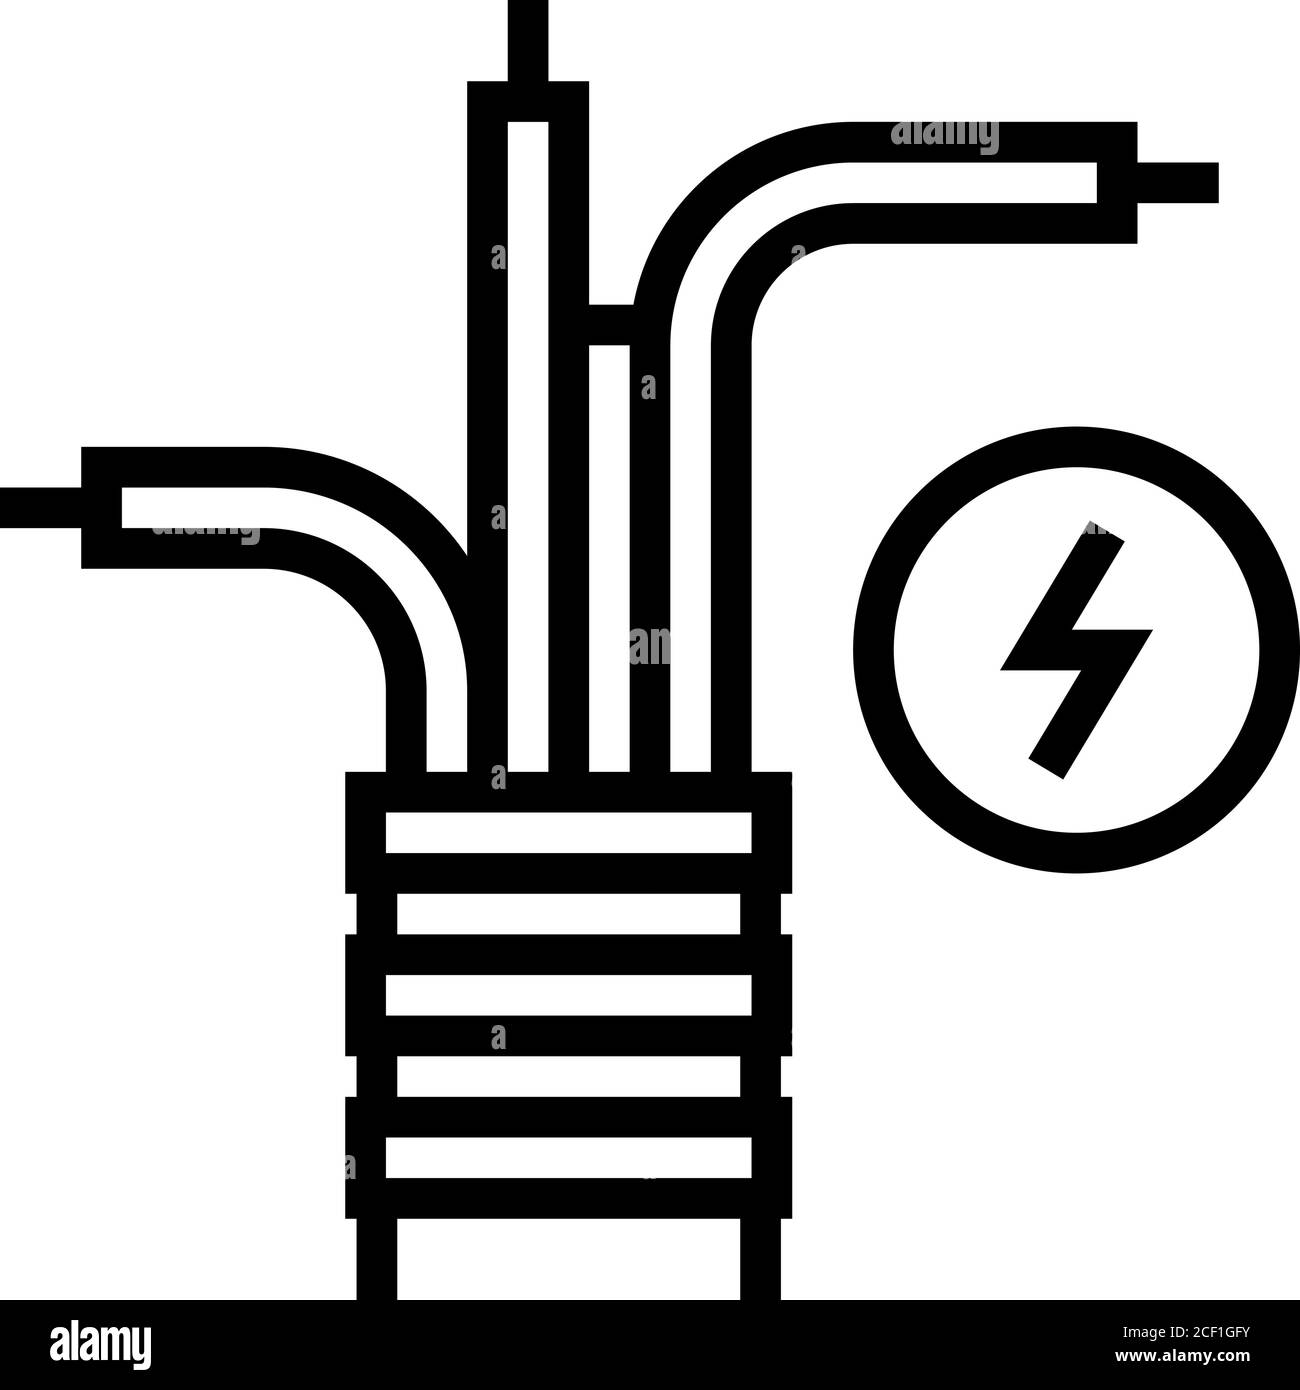 Vektorgrafik für Symbole für Stromkabel Stock-Vektorgrafik - Alamy